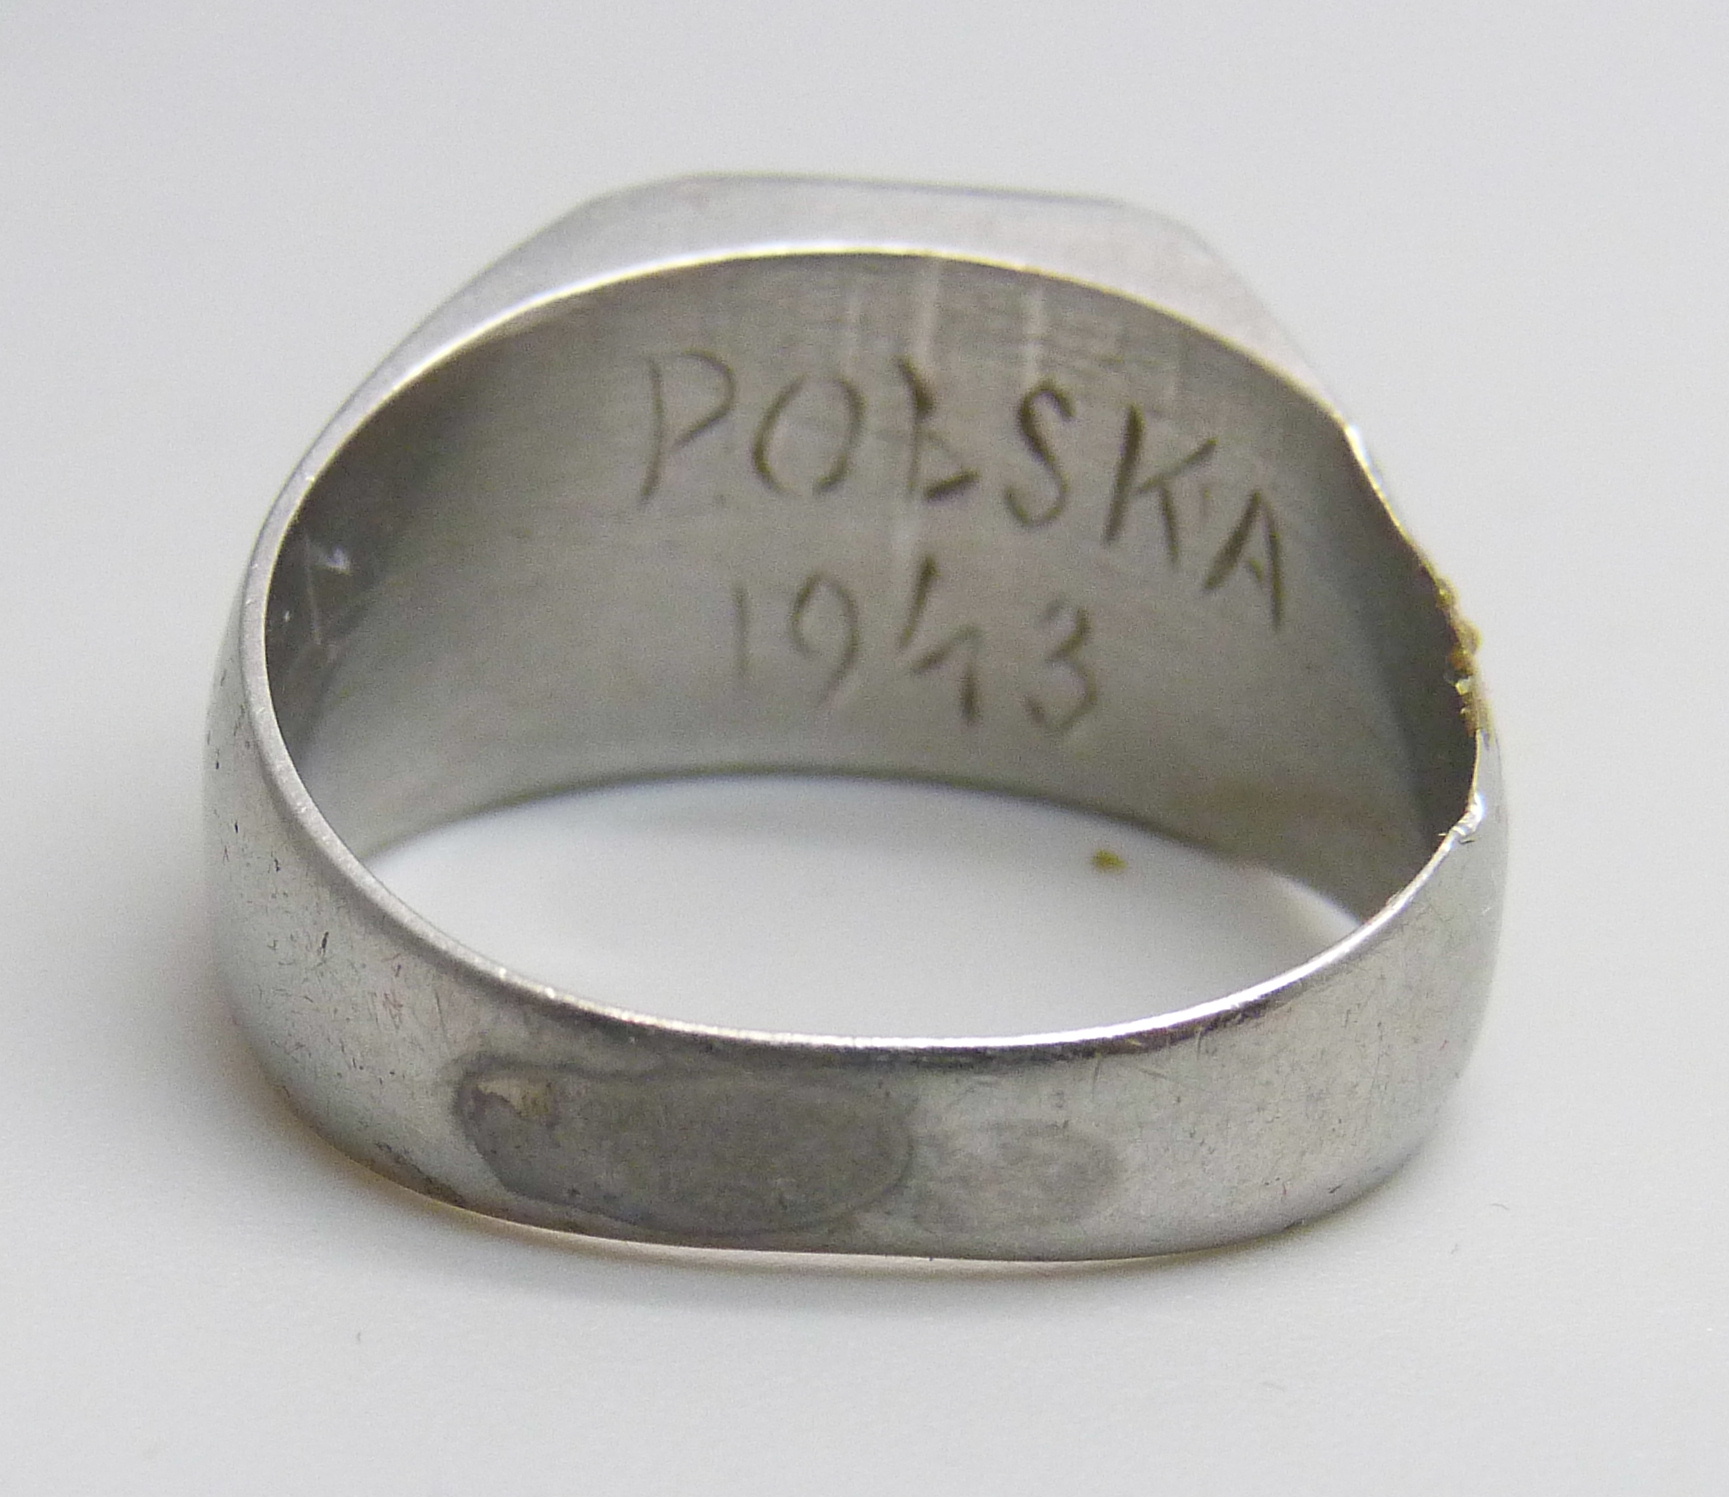 A plated ring, possibly Prisoner of War made, inside marked 'Polska 1943' - Image 3 of 3